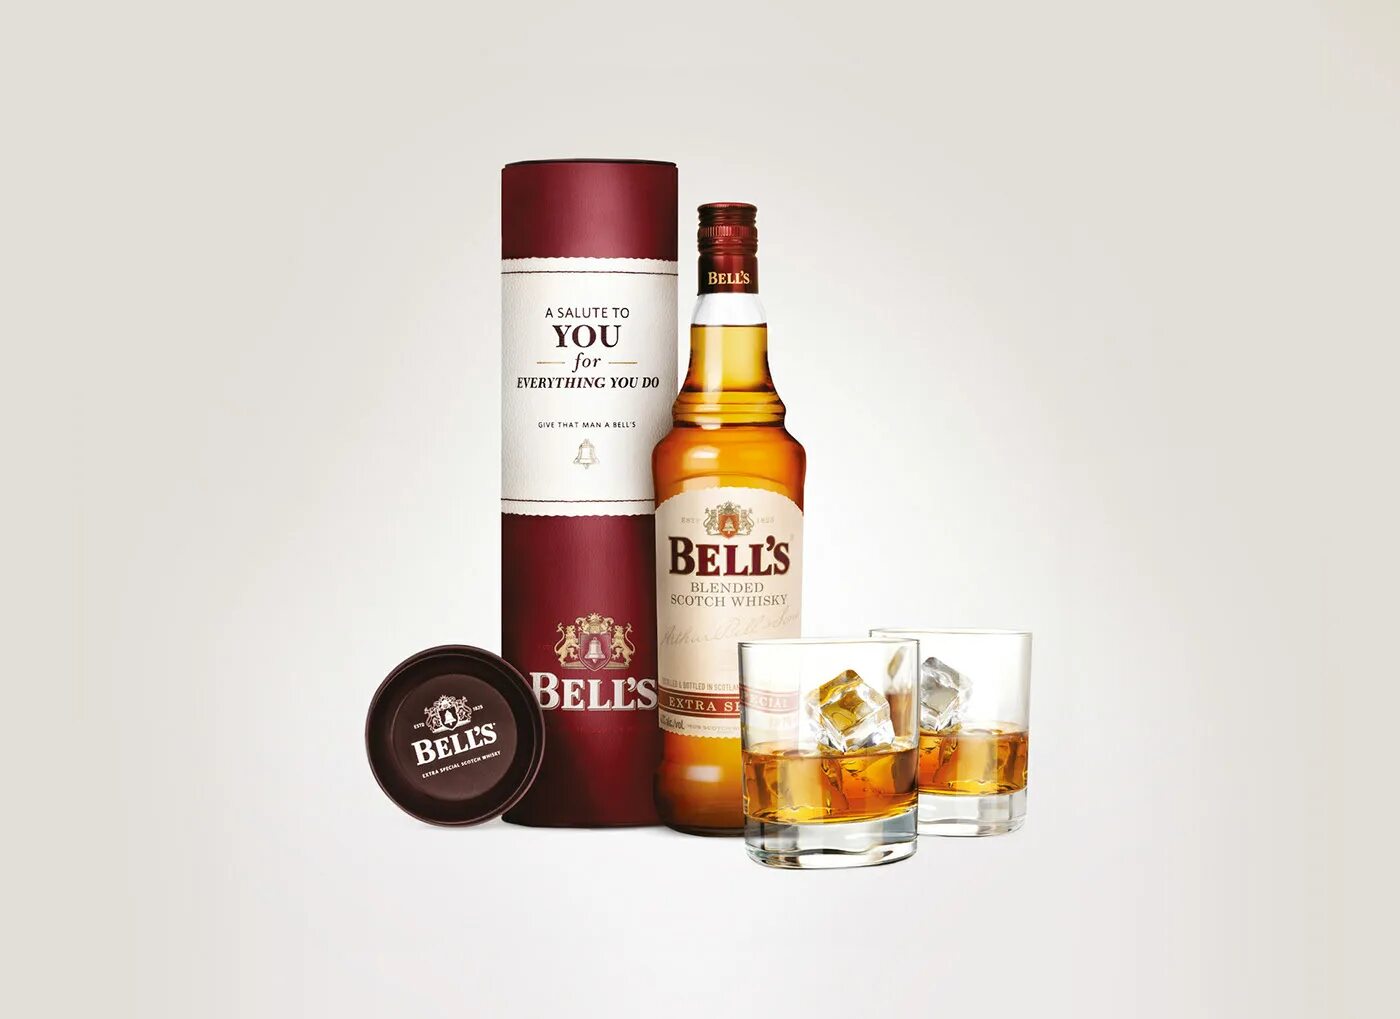 Bells Blended Scotch Whisky. Виски белс 1 л. Виски шотландский купажированный Бэллс ориджинал 1л. Виски Беллс 0.7. Bells whisky